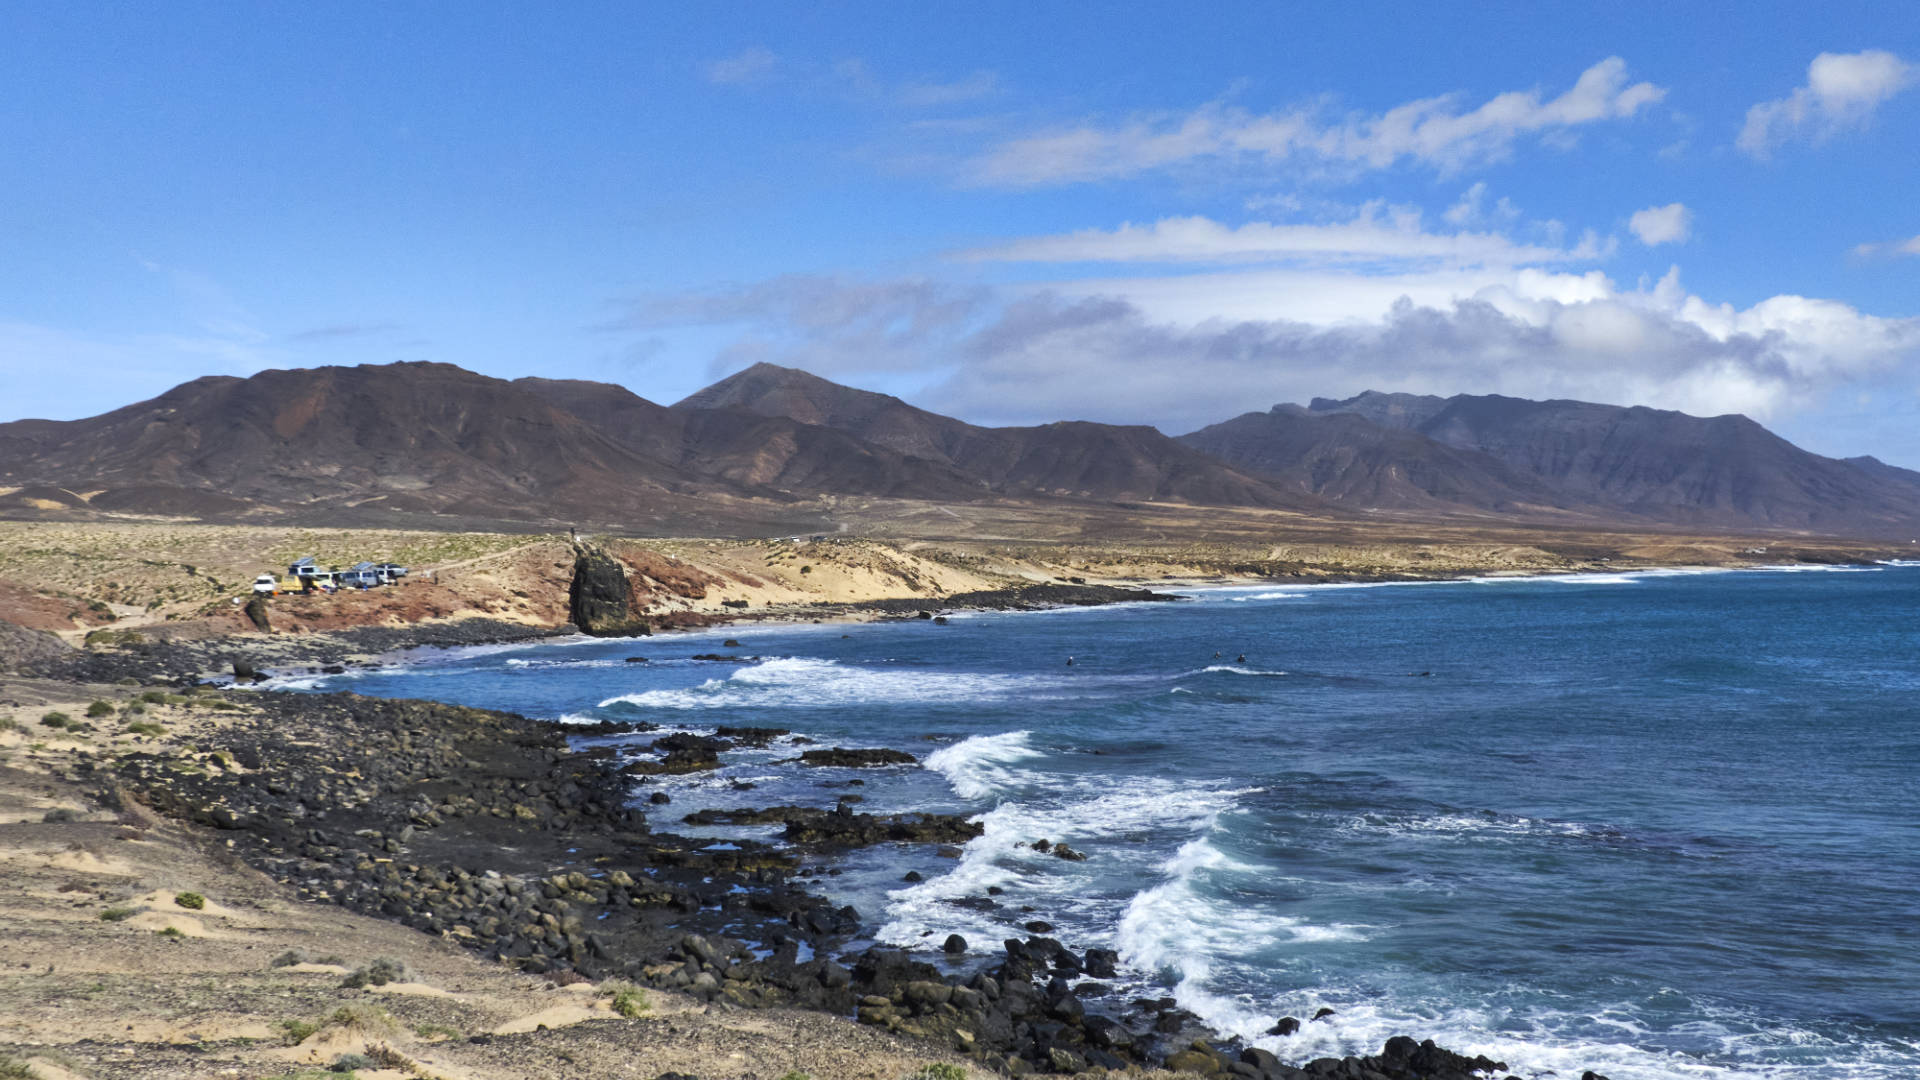 Punta Salinas Jandía Fuerteventura.